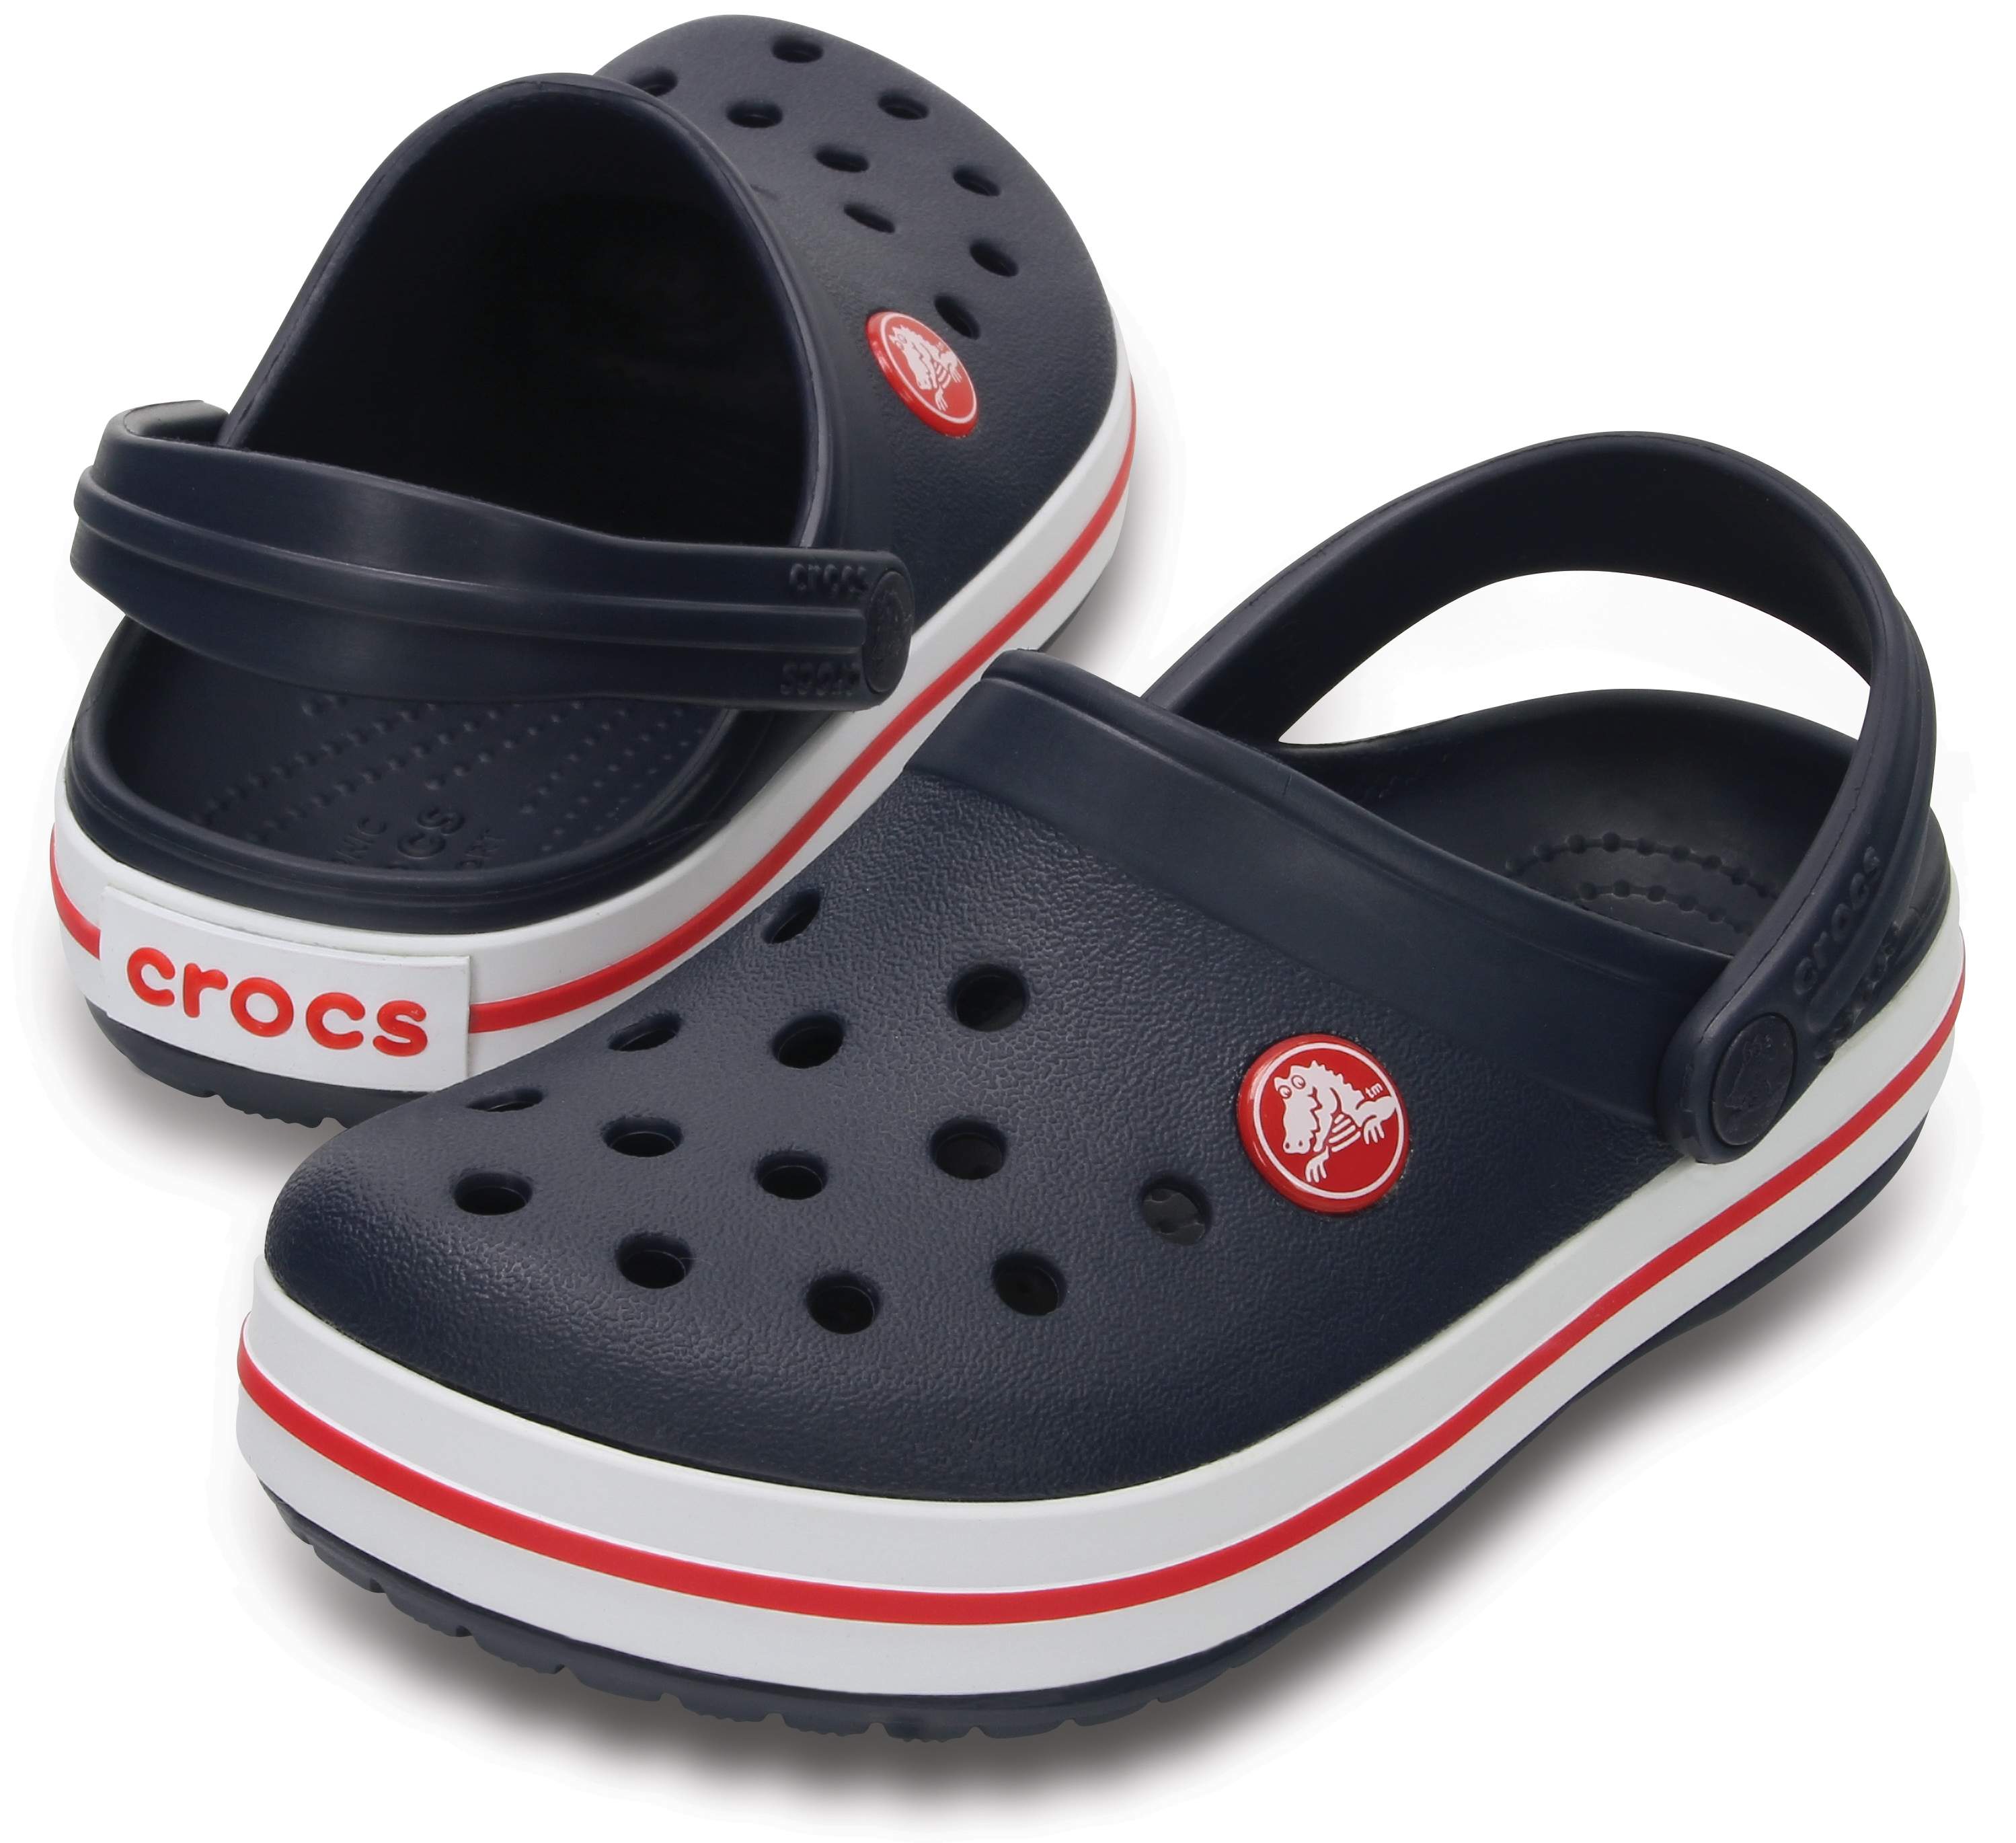 size 9 toddler crocs